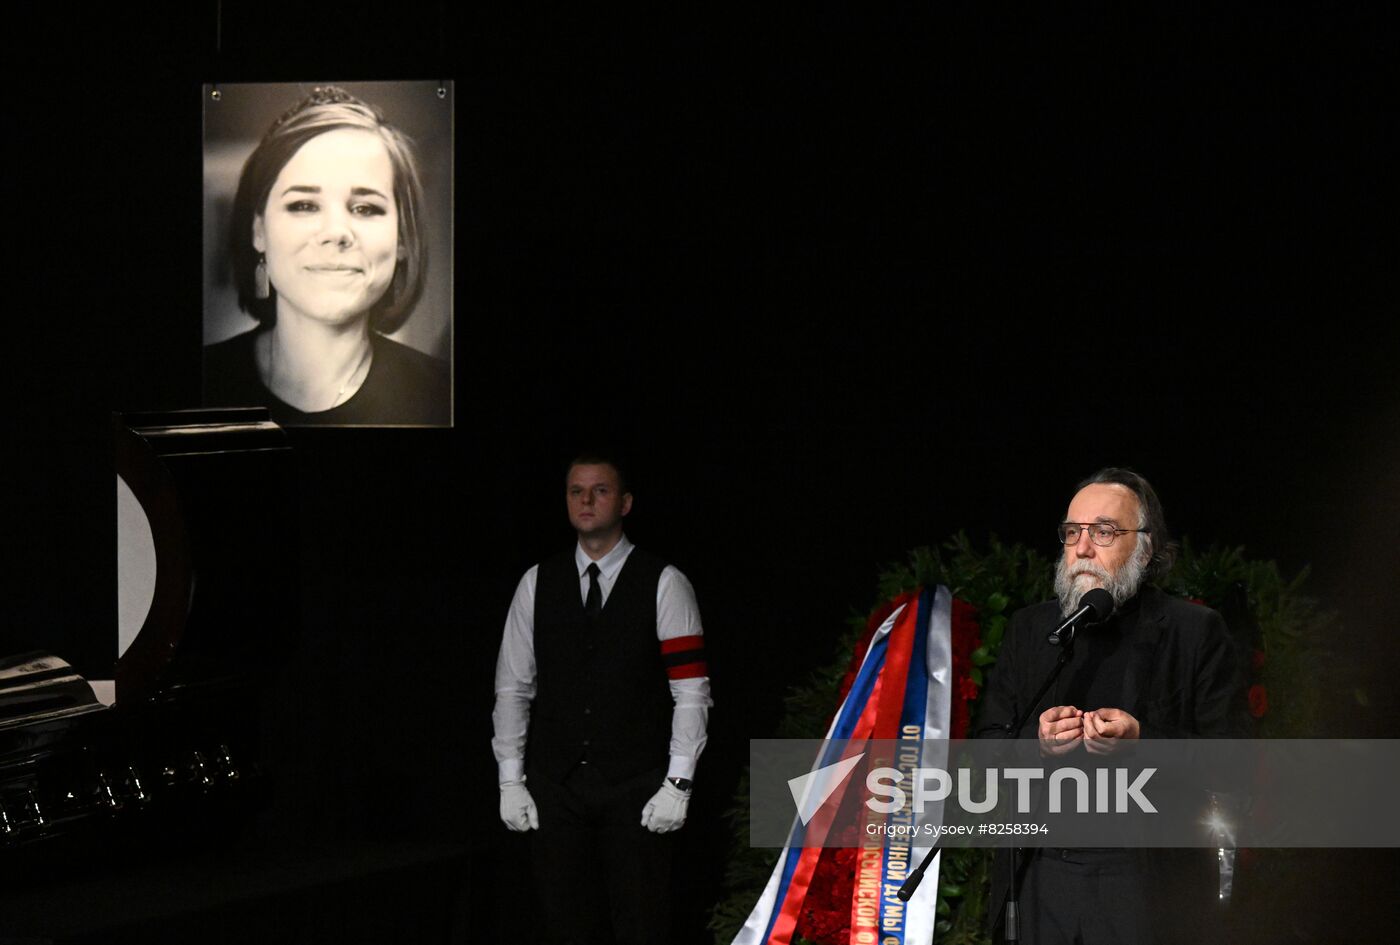 Russia Political Philosopher Daughter Murder